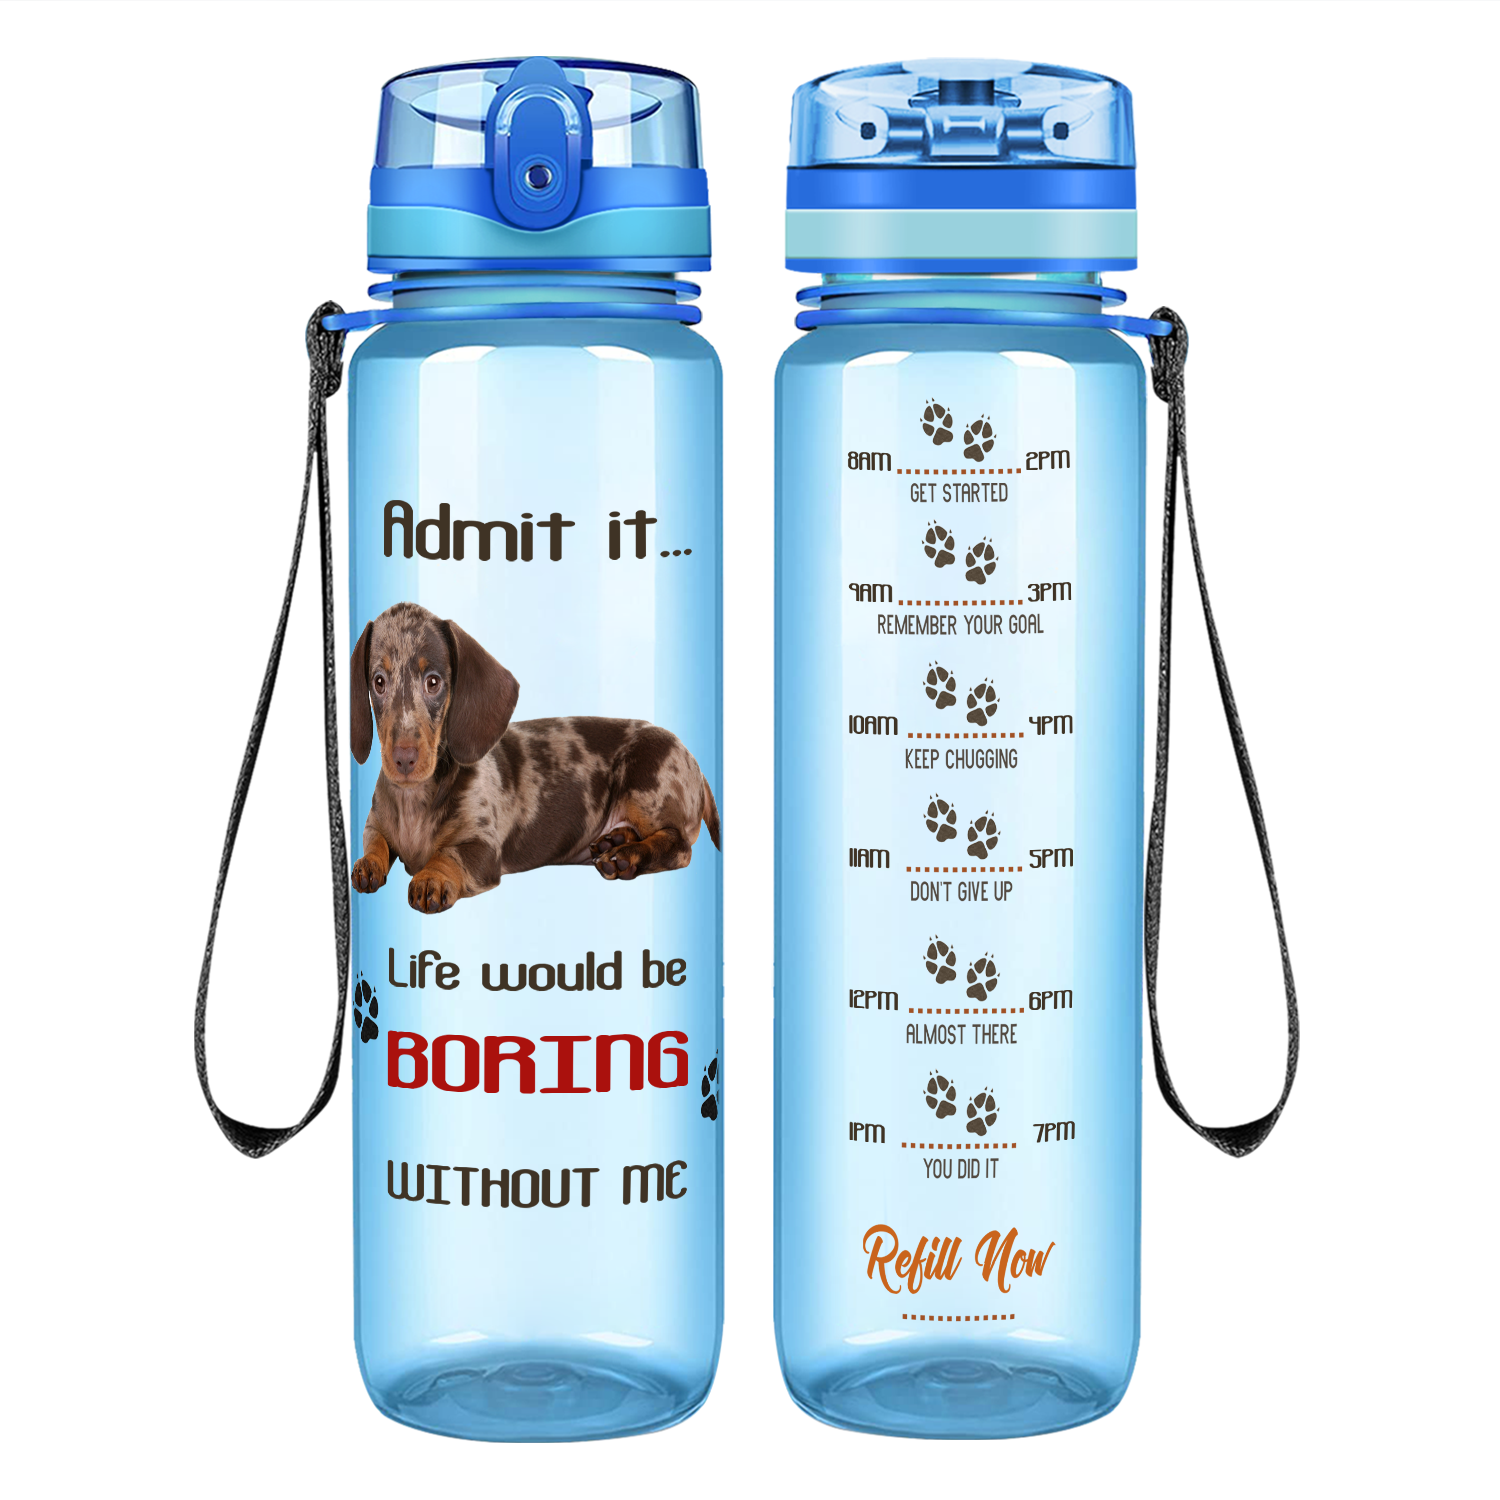 Dog & Me Water Bottle